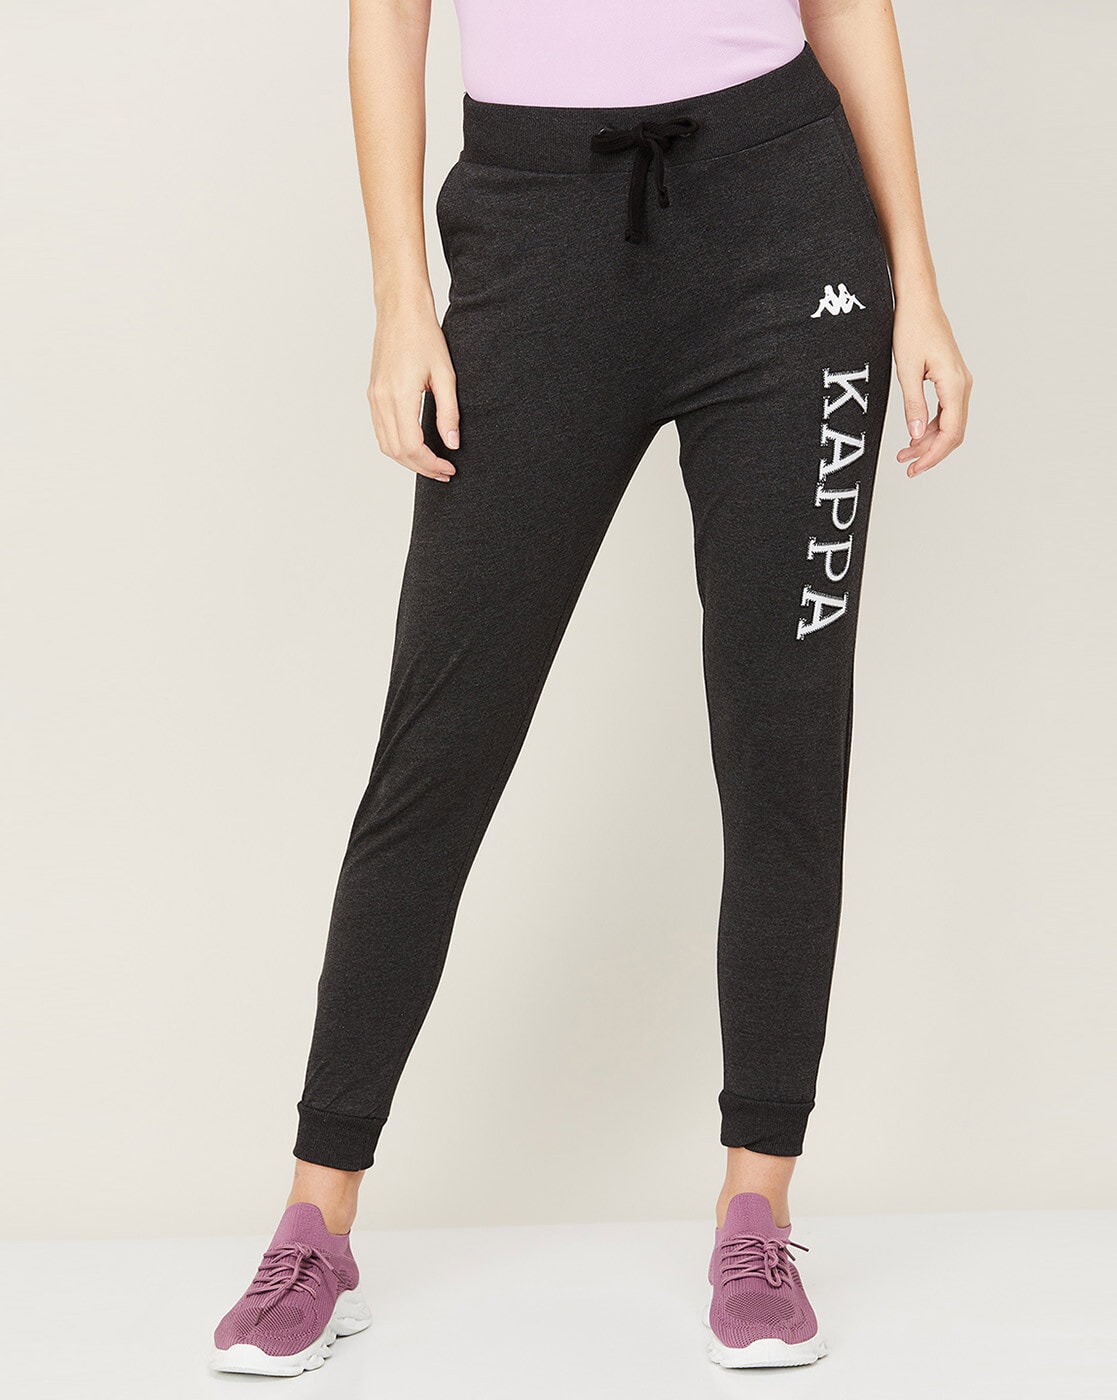 Kappa track pants size 6 Years Pink athletic | eBay